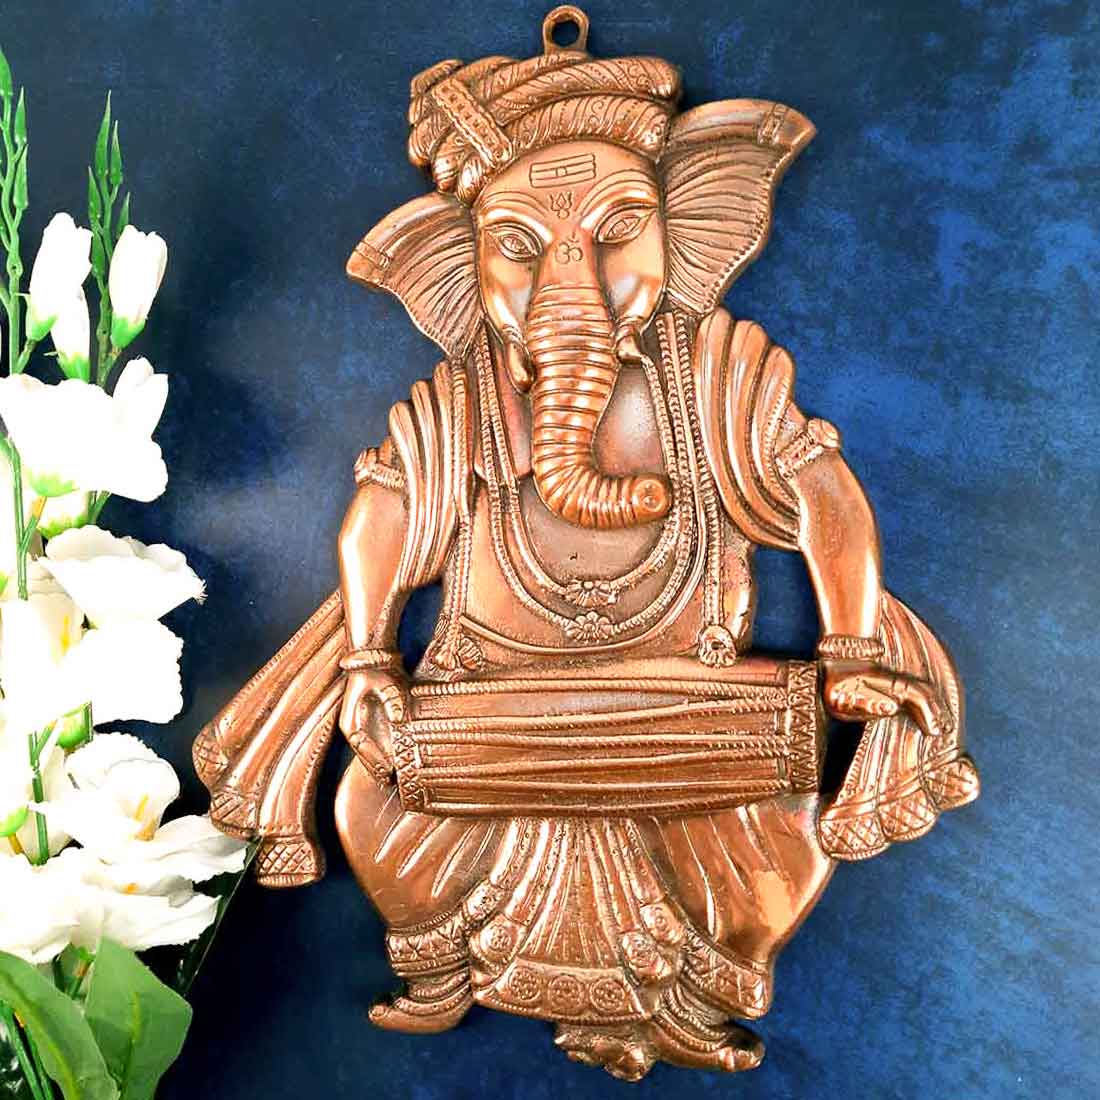 Lord Ganesh Wall Hanging Idol | Metal Ganesha Playing Dholak Wall Statue Decor for Main Gate | Ganpati Murti for Home, Puja & Religious Decor & Gift -17 Inch